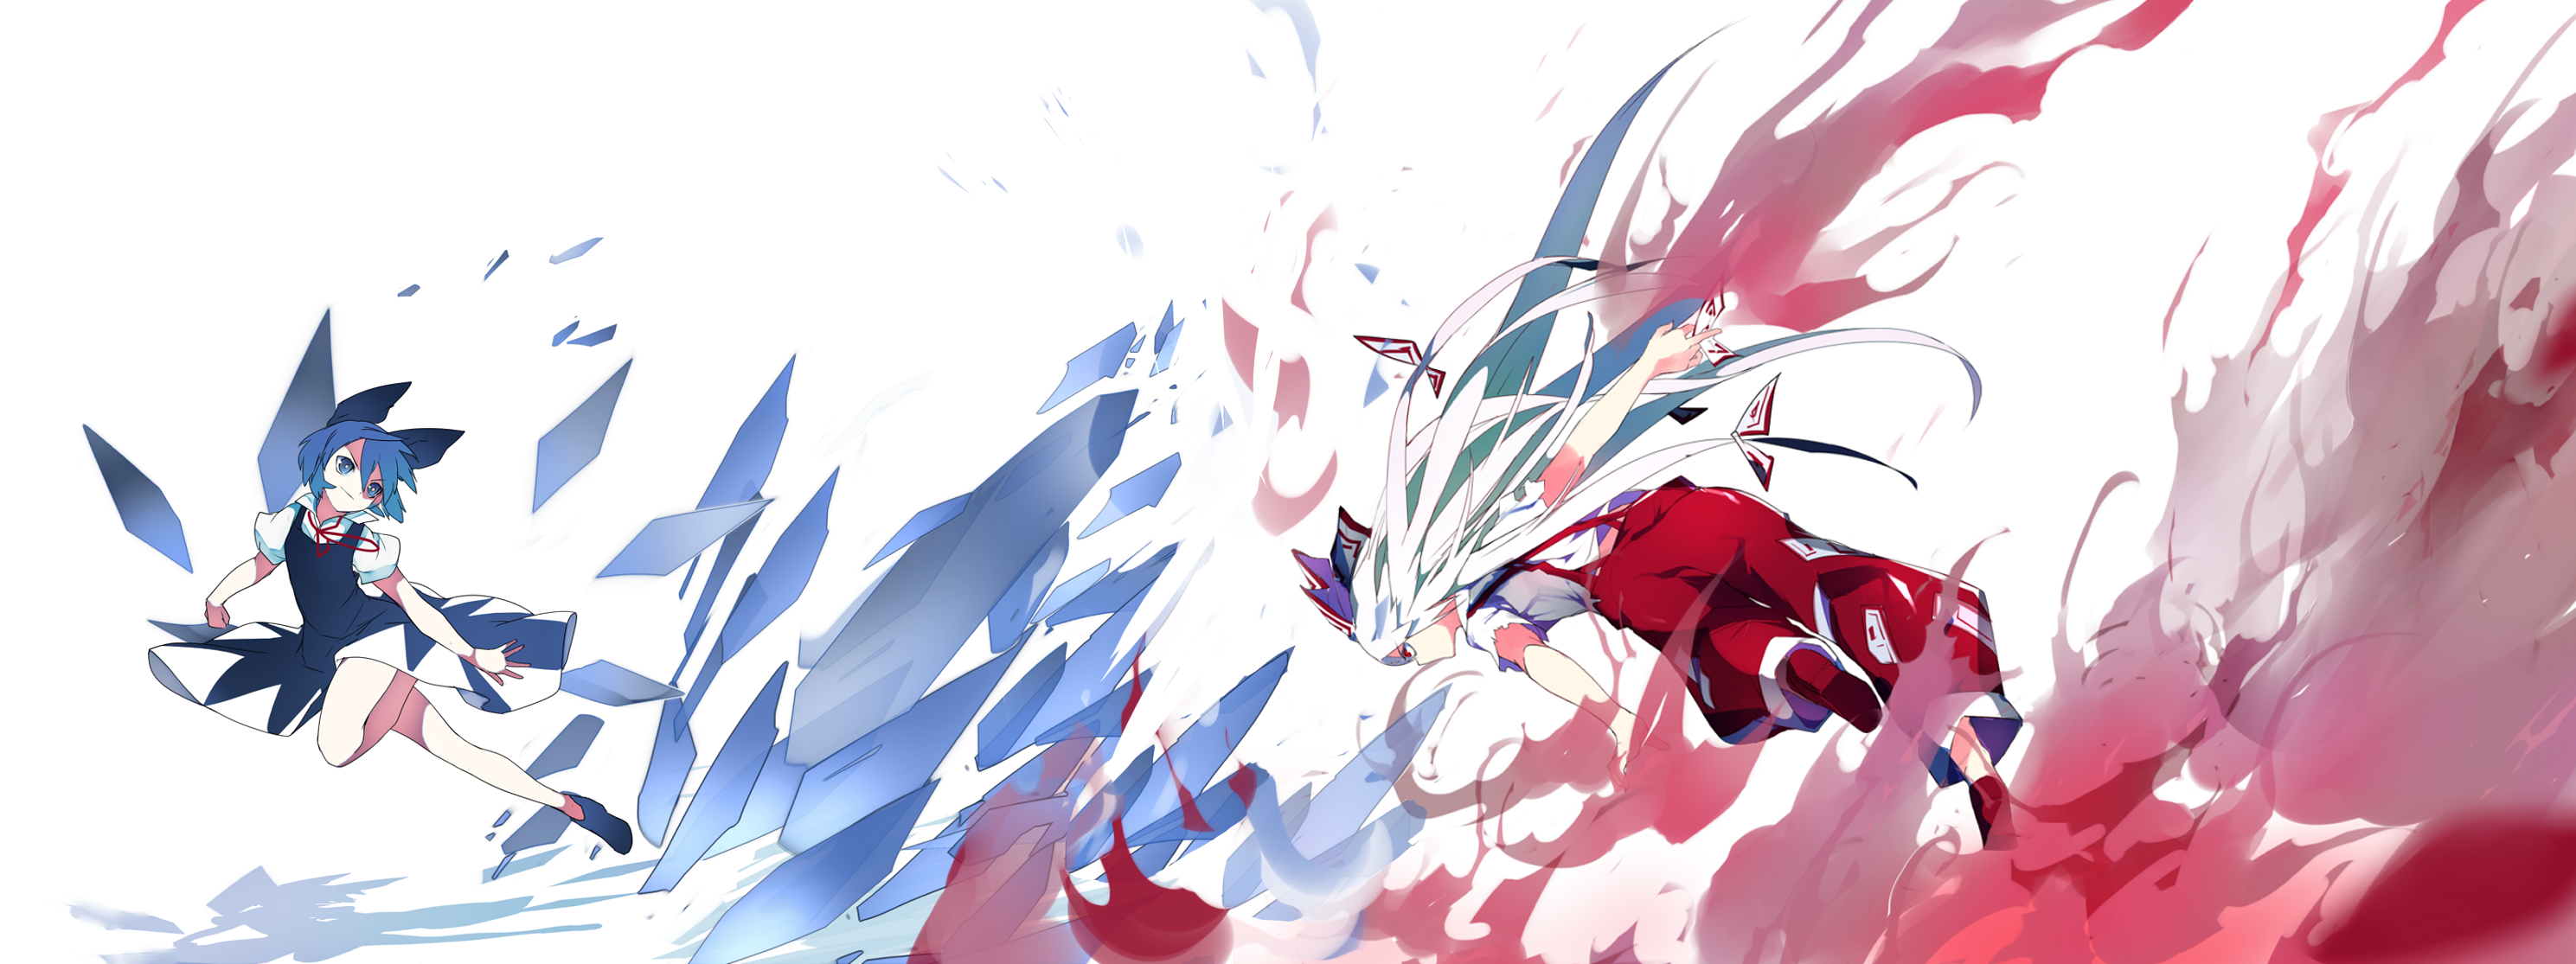 Digital Art Fantasy Art Artwork Original Characters Anime Girls Weapon Cirno Touhou Warrior Battle F 2978x1115